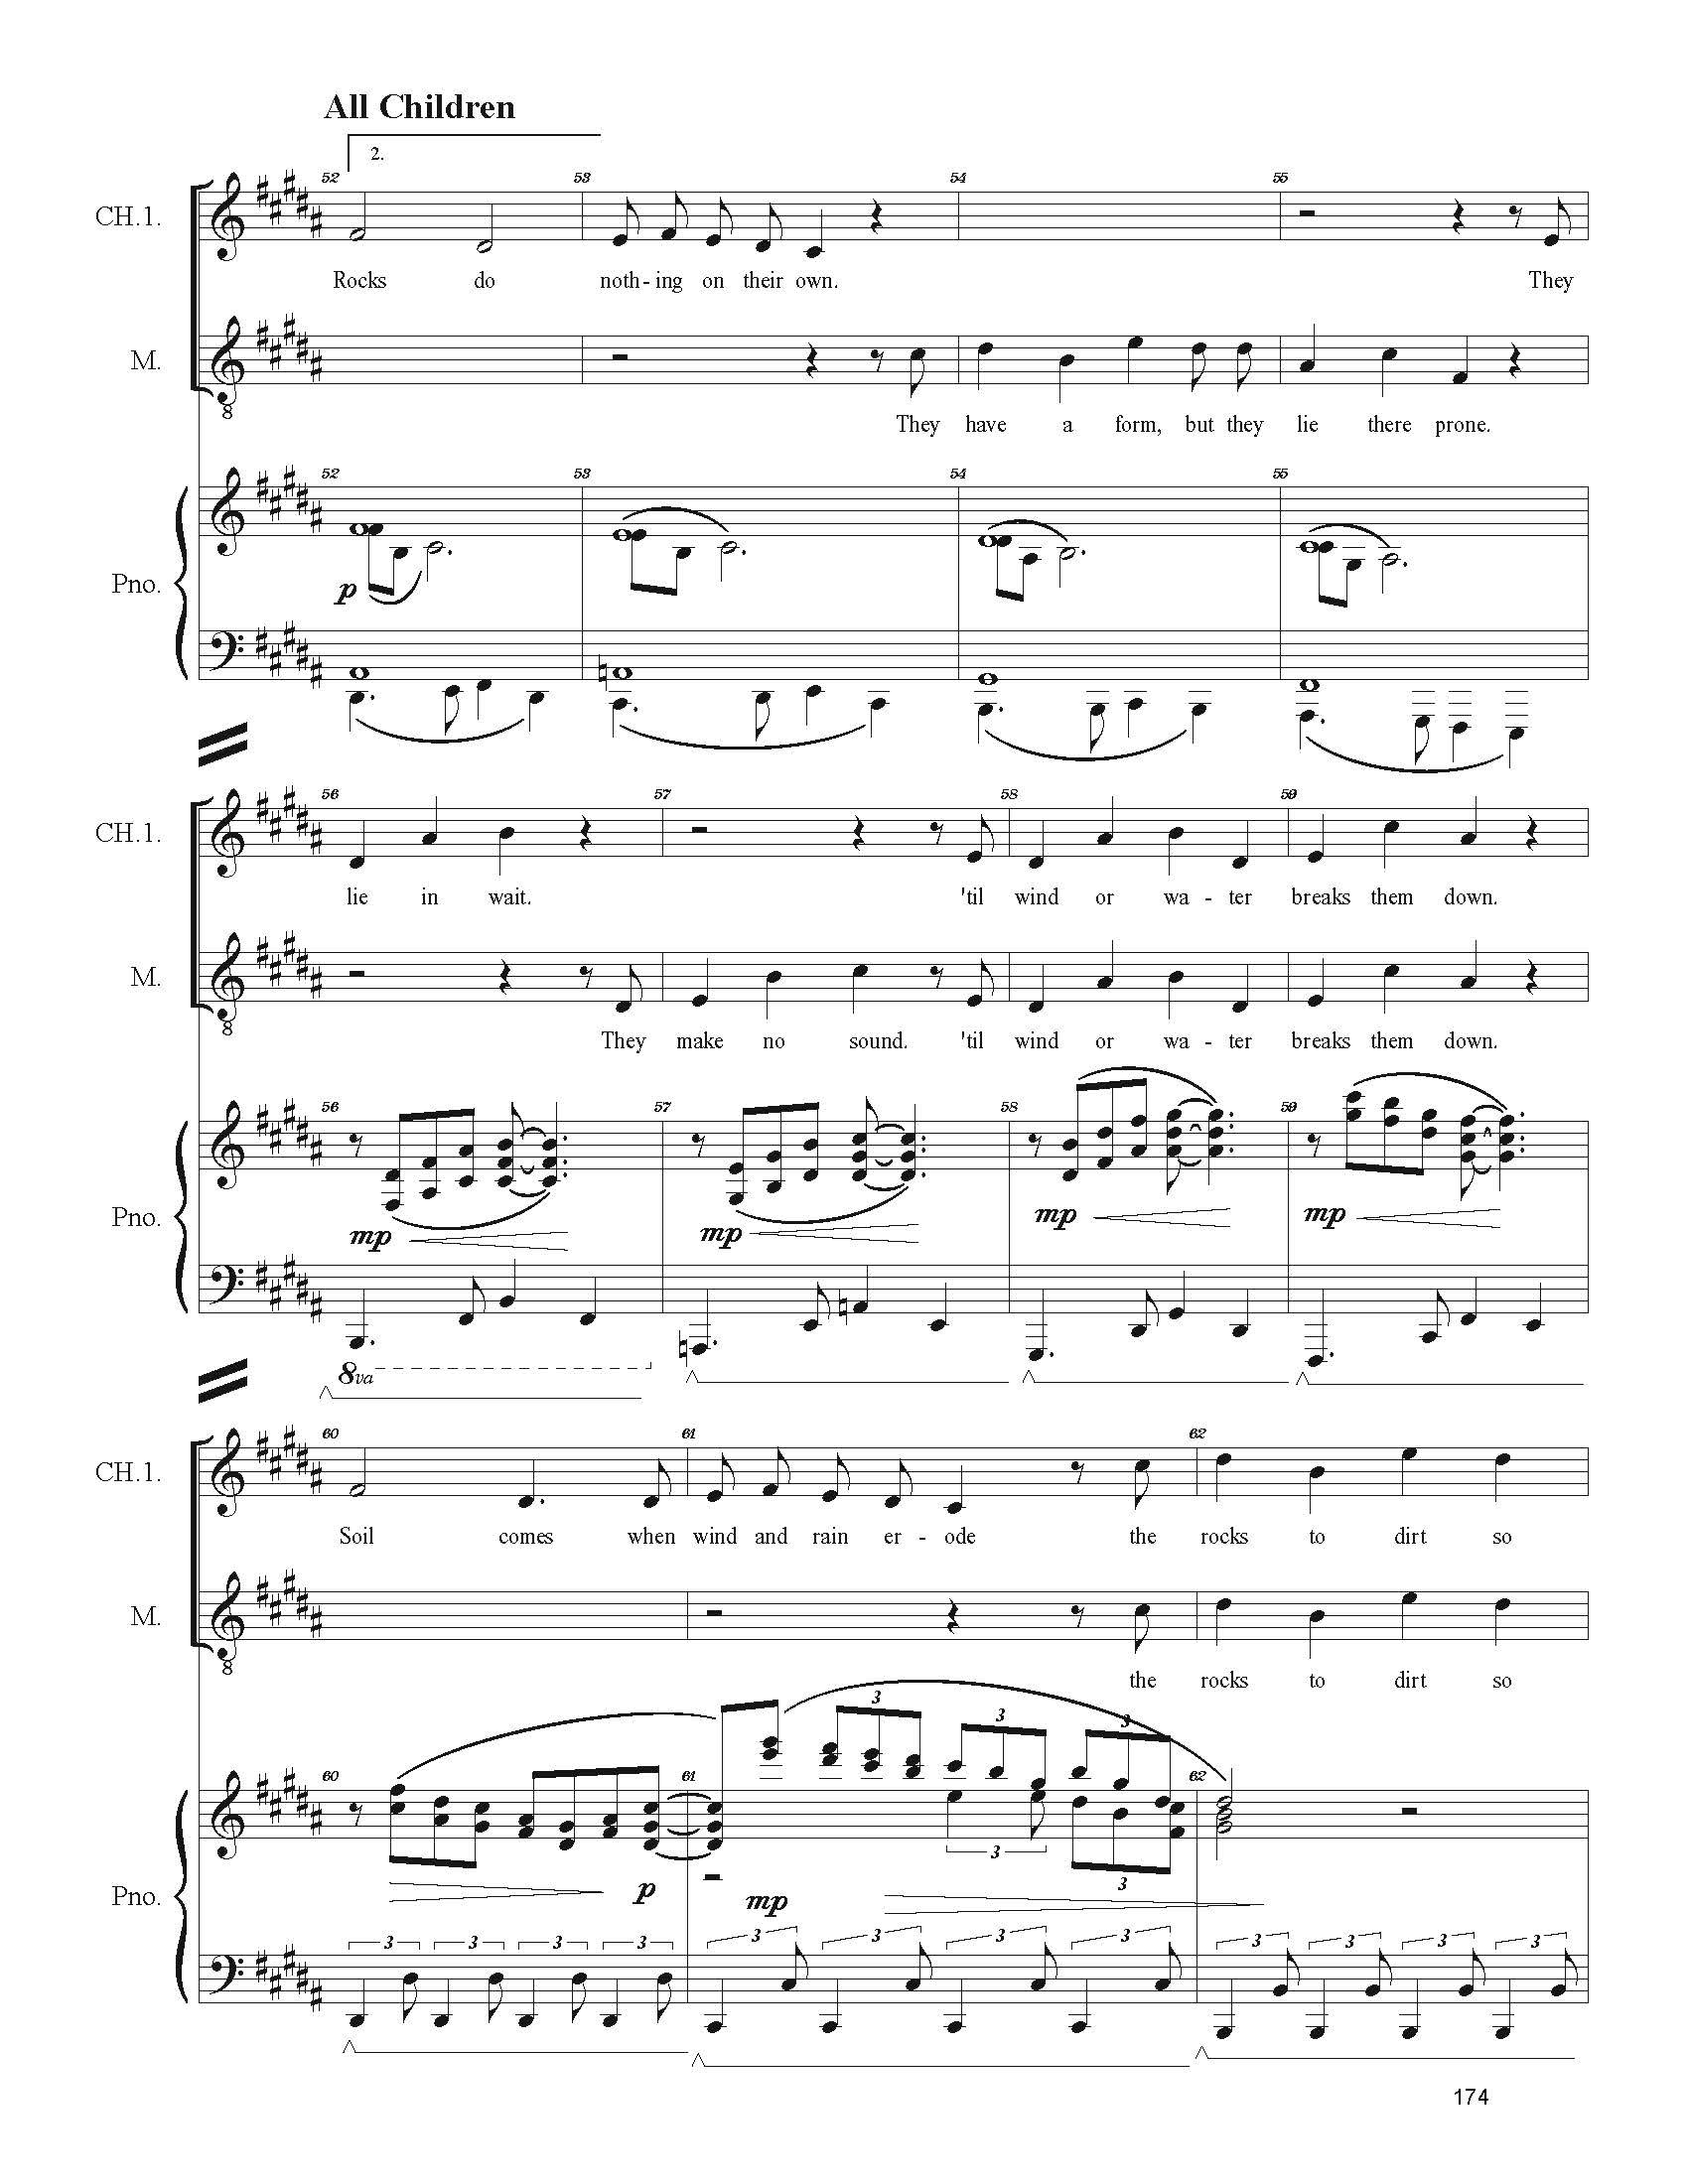 FULL PIANO VOCAL SCORE DRAFT 1 - Score_Page_174.jpg